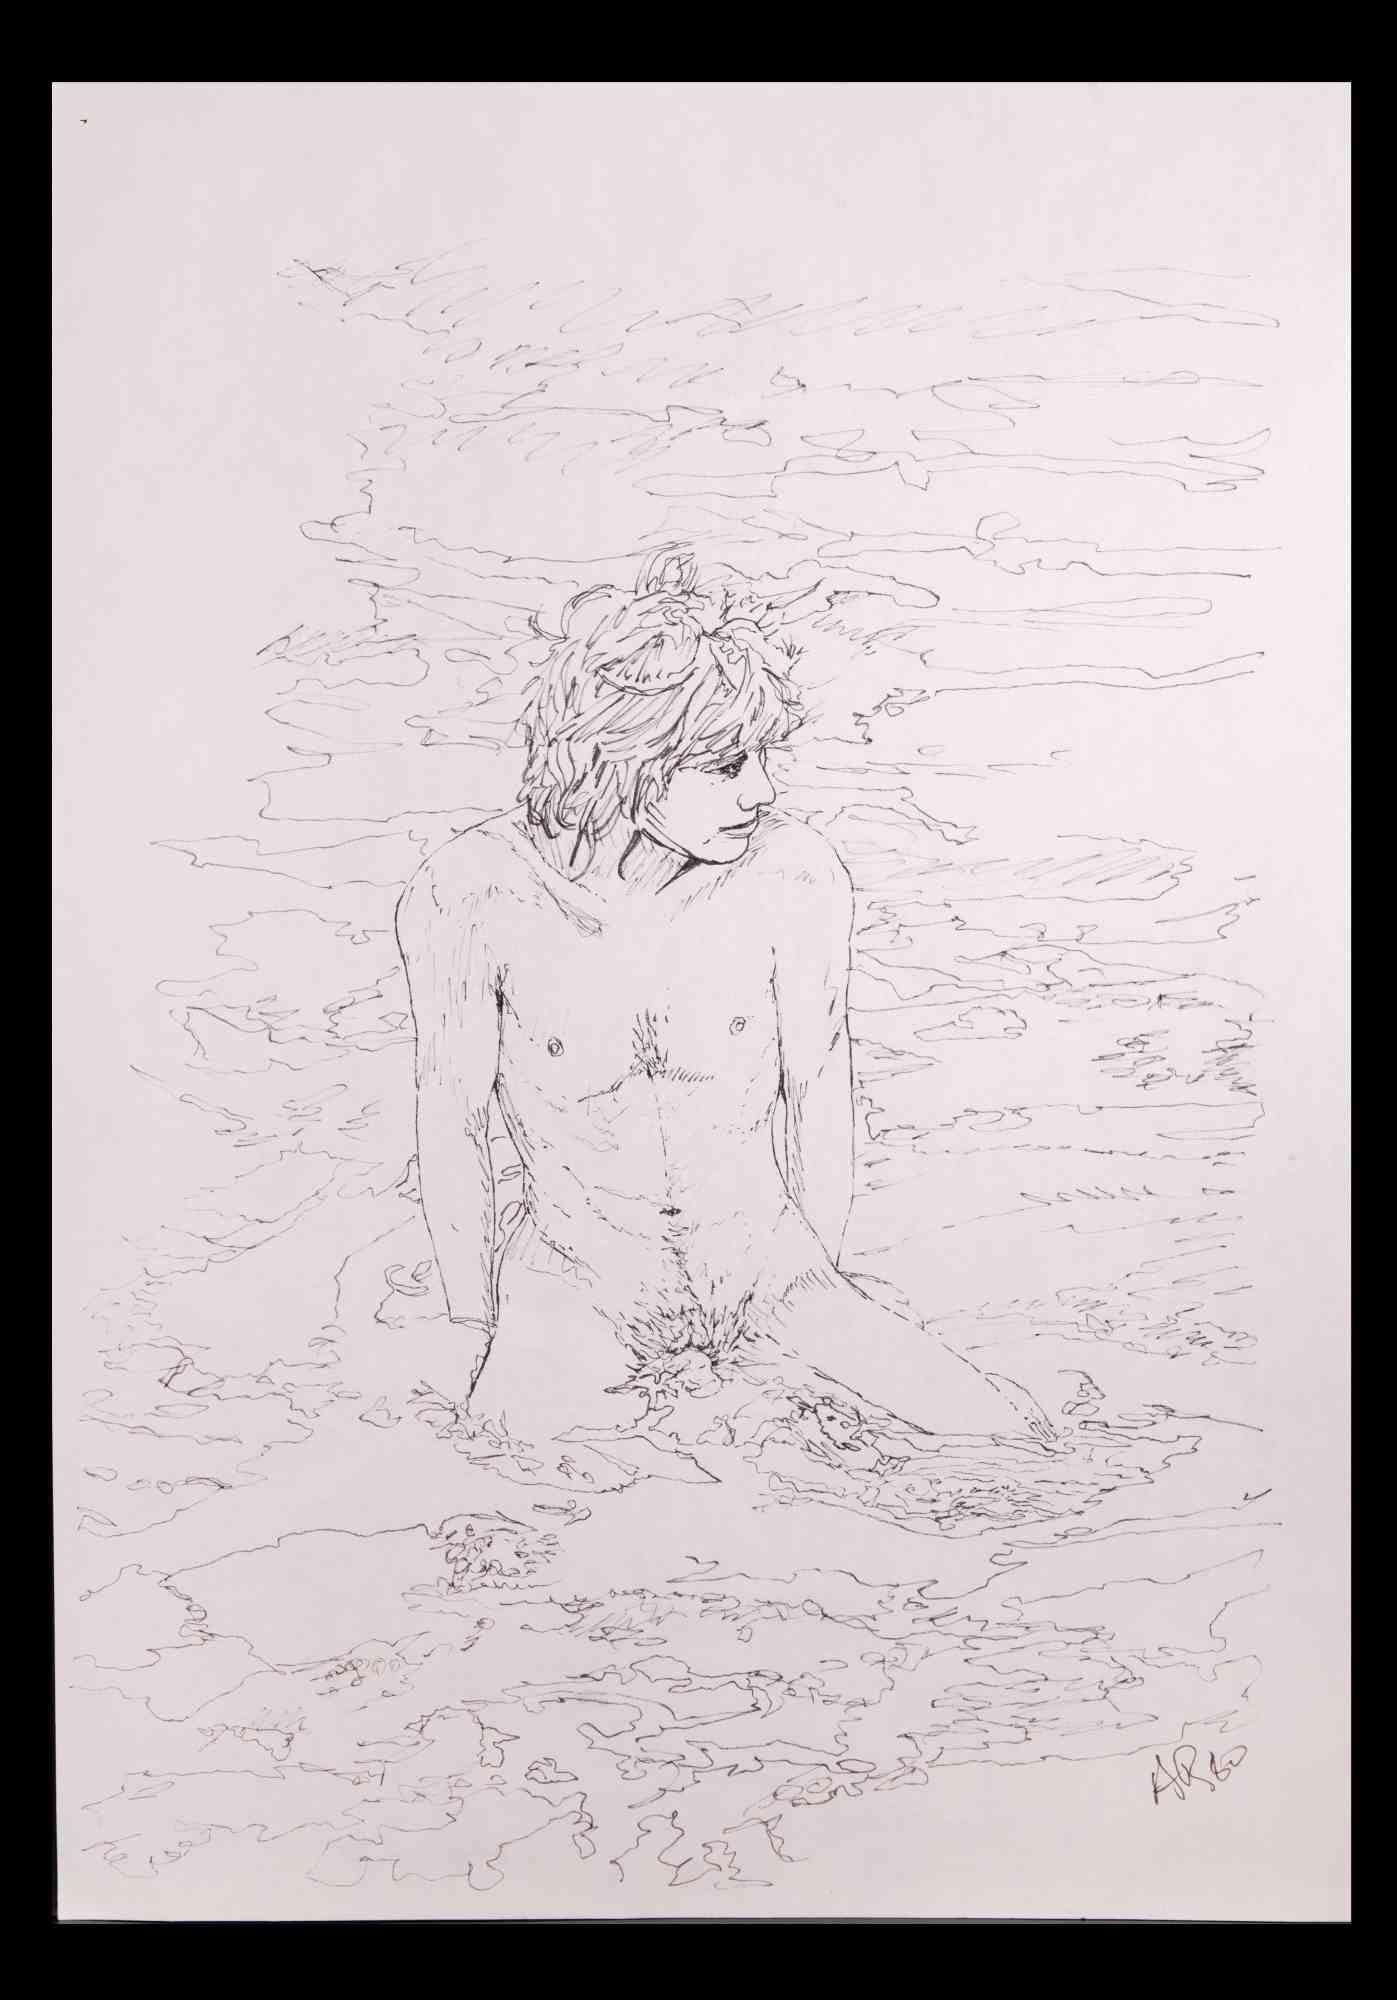 Le garçon au bord de la mer - dessin original d'Anthony Roaland - 1980